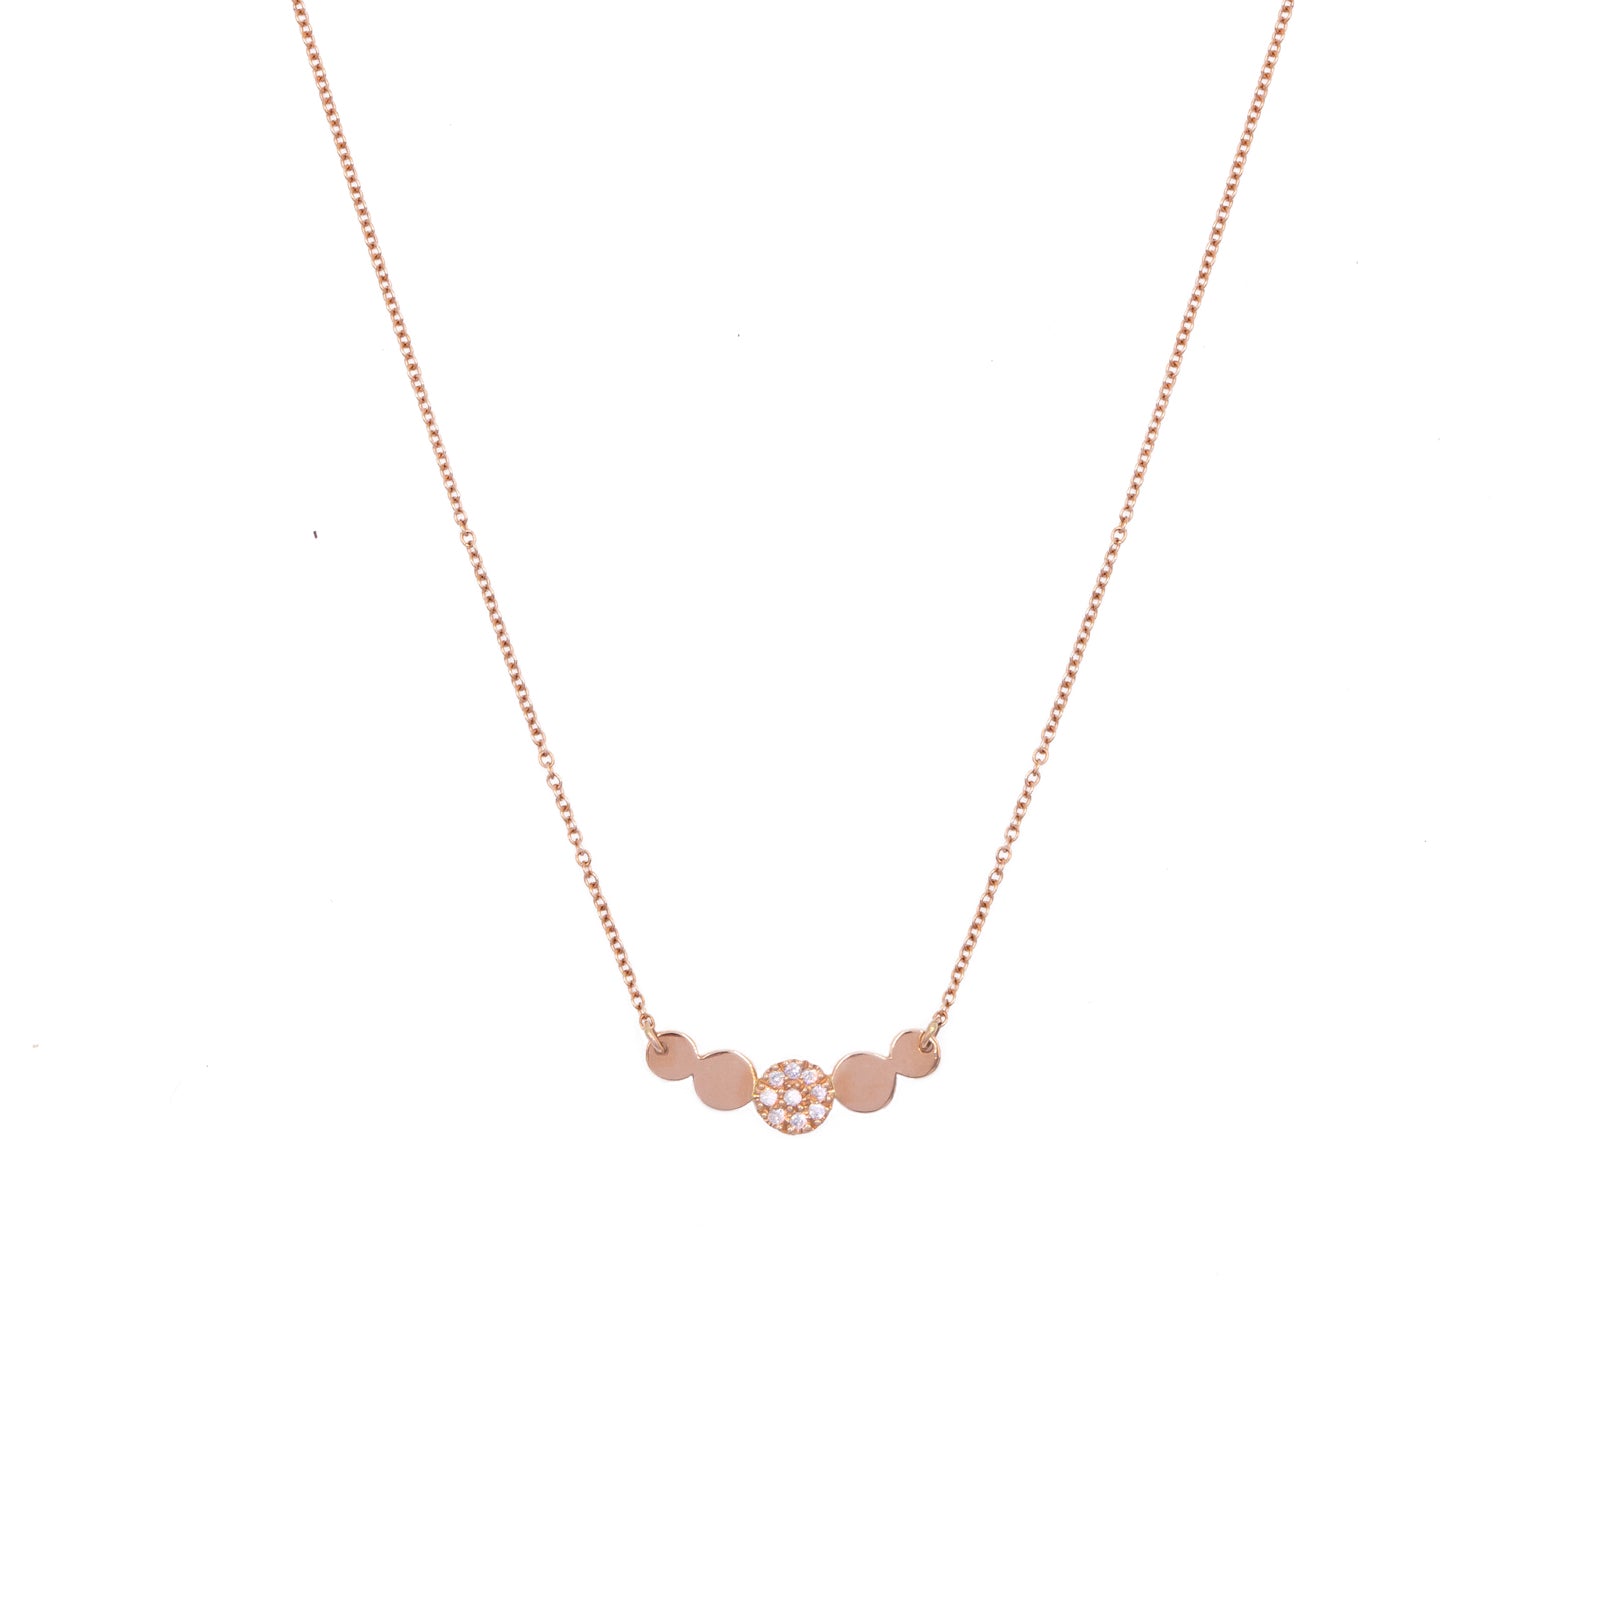 Teorema Bubbles necklace with 5 round diamonds